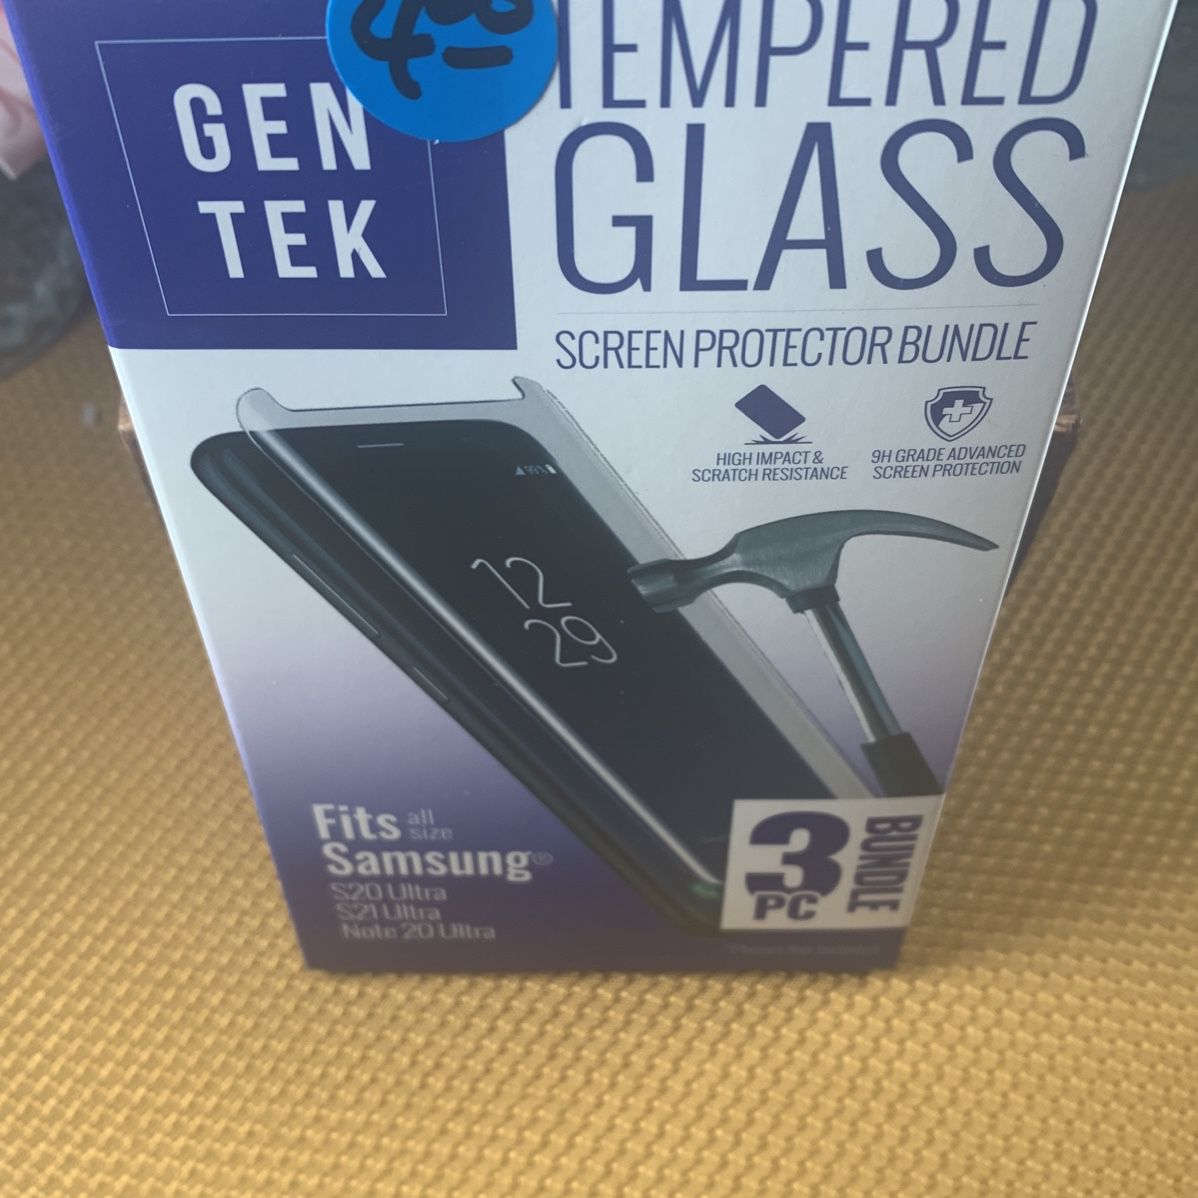 Gen Tek Tempered Glass Screen Protector Bundle